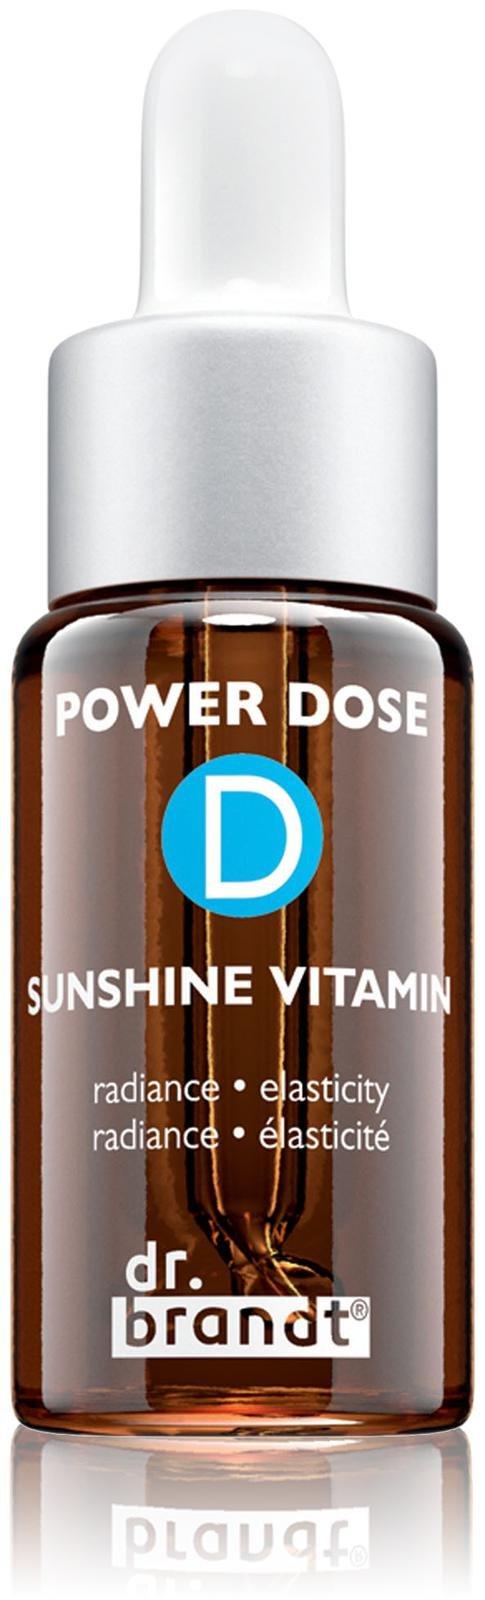 Dr. Brandt Xyy Power Dose D Sunshine Vitamin For Skin - 0.6 Oz